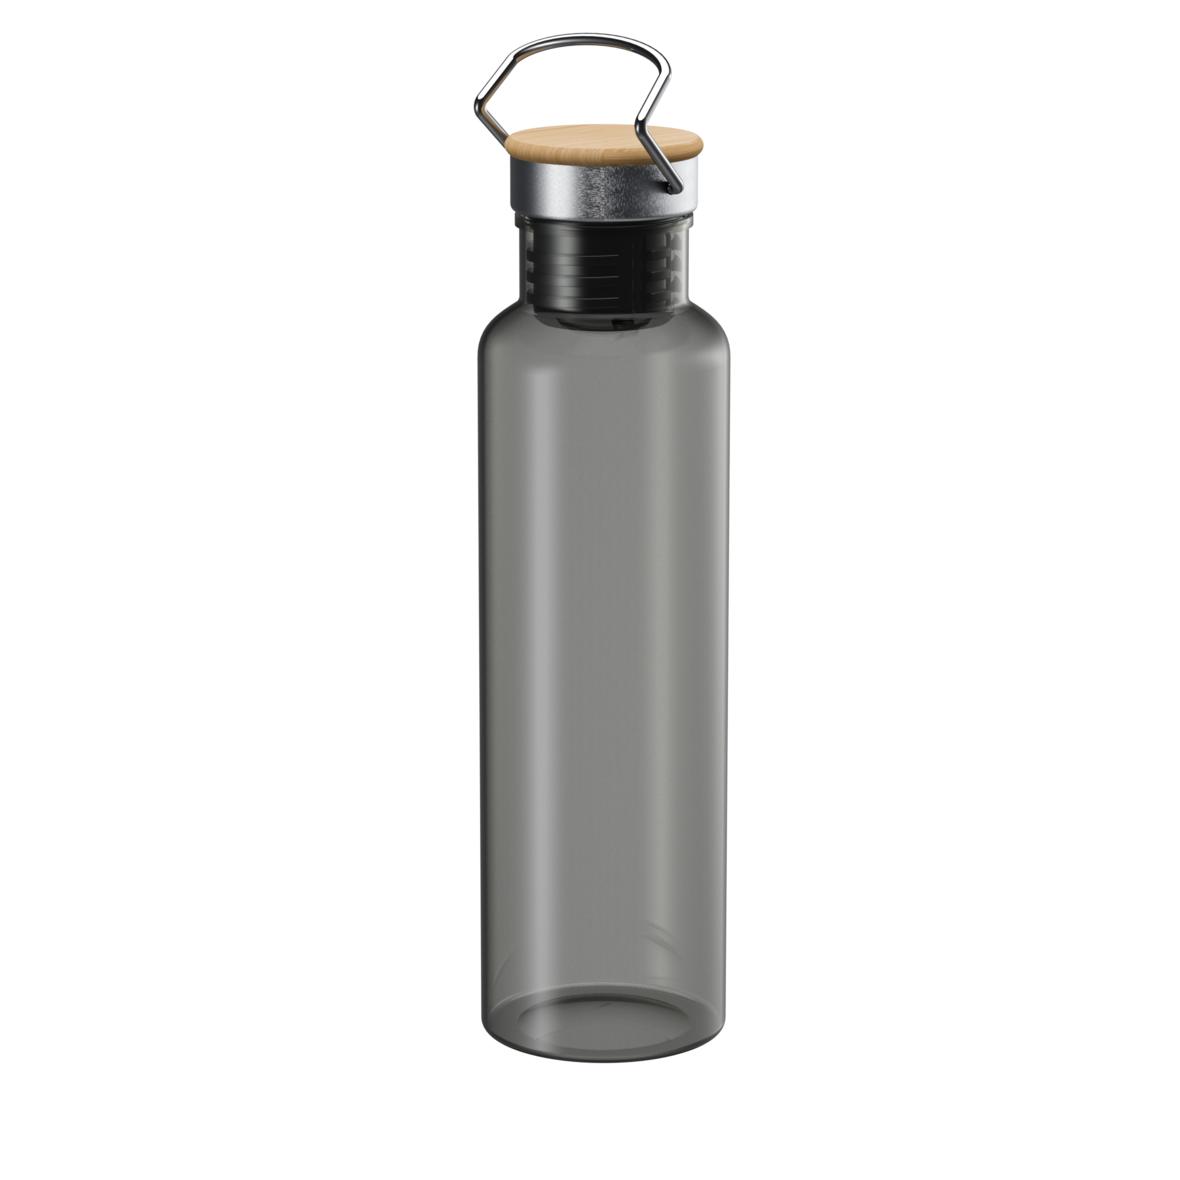 A lightweight flask with a minimalist design - Walberswick